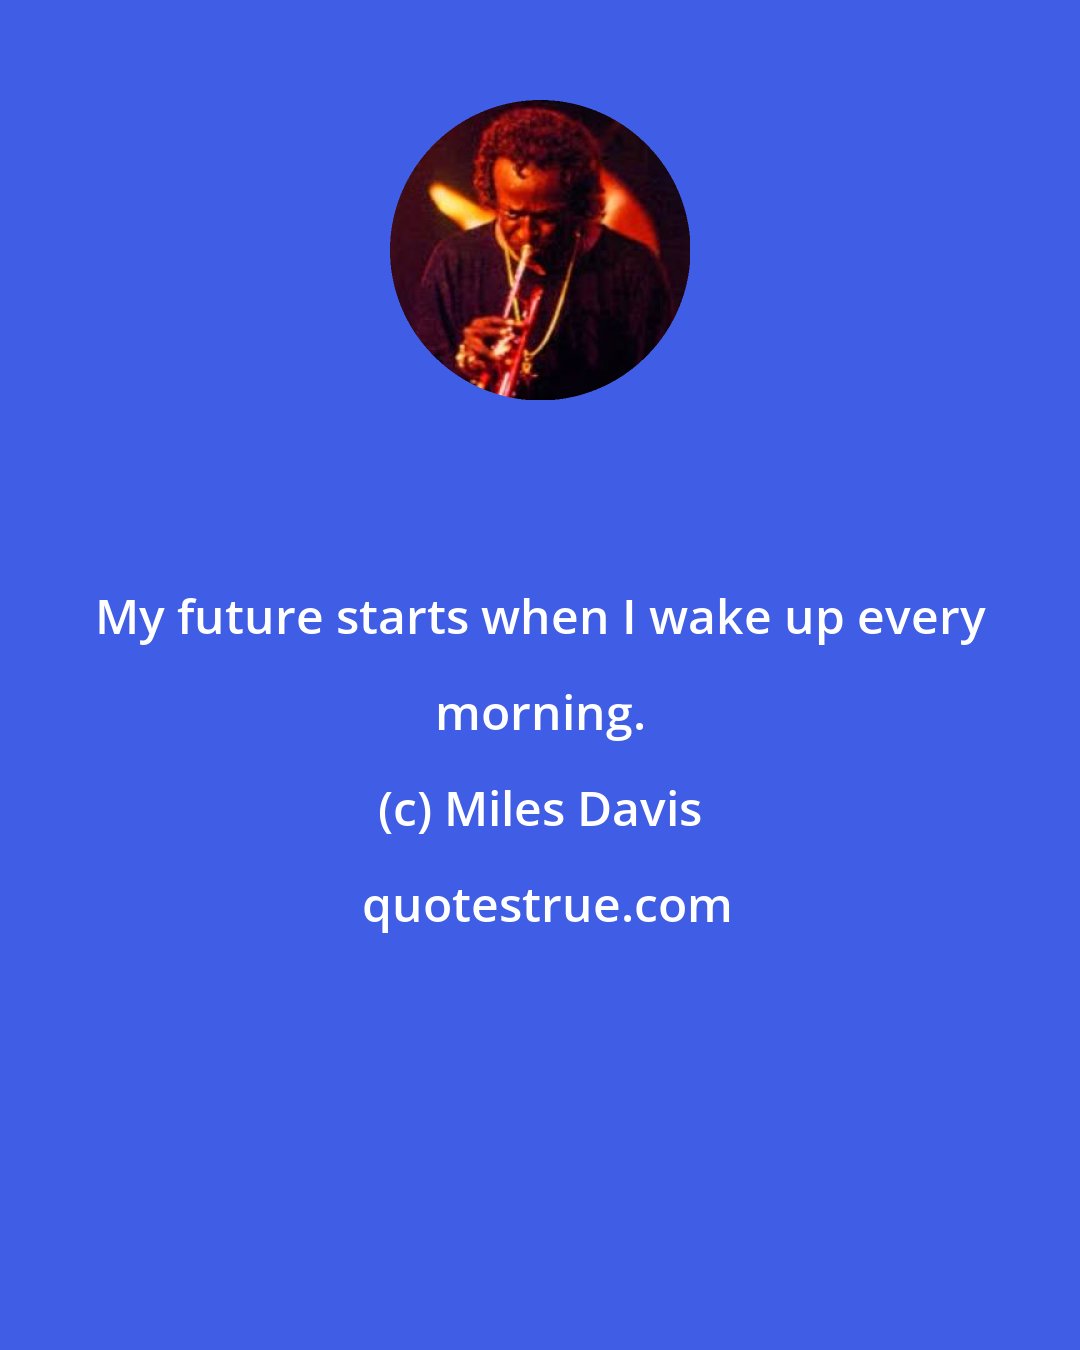 Miles Davis: My future starts when I wake up every morning.